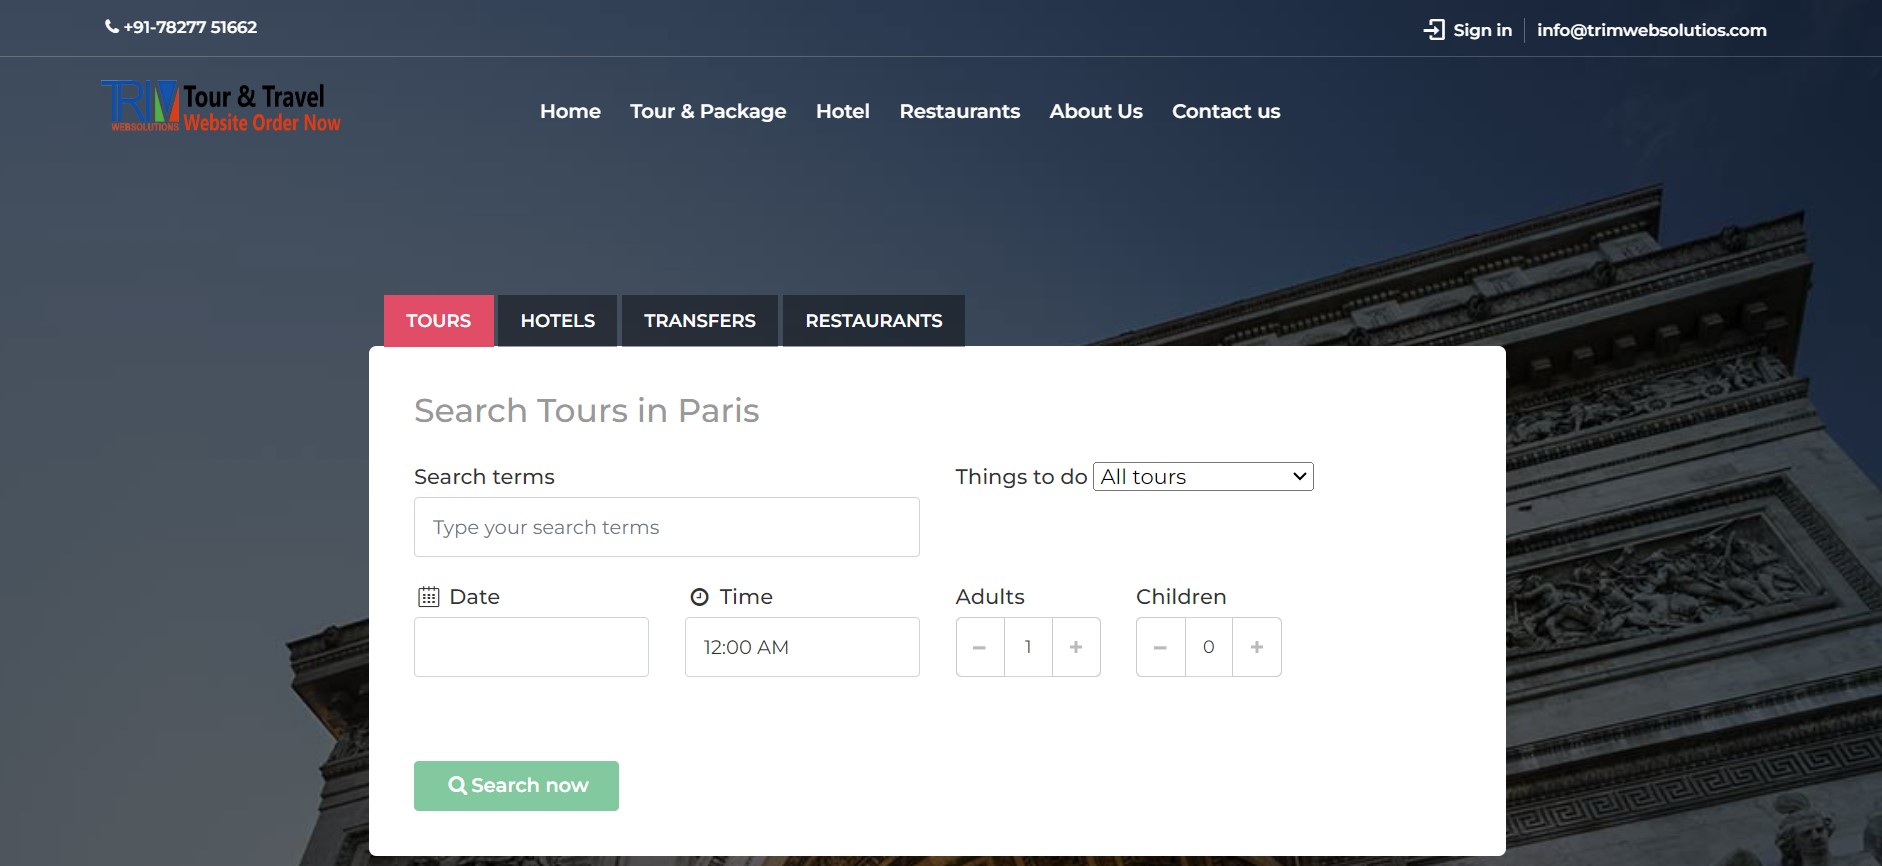 Tour & Travel Website